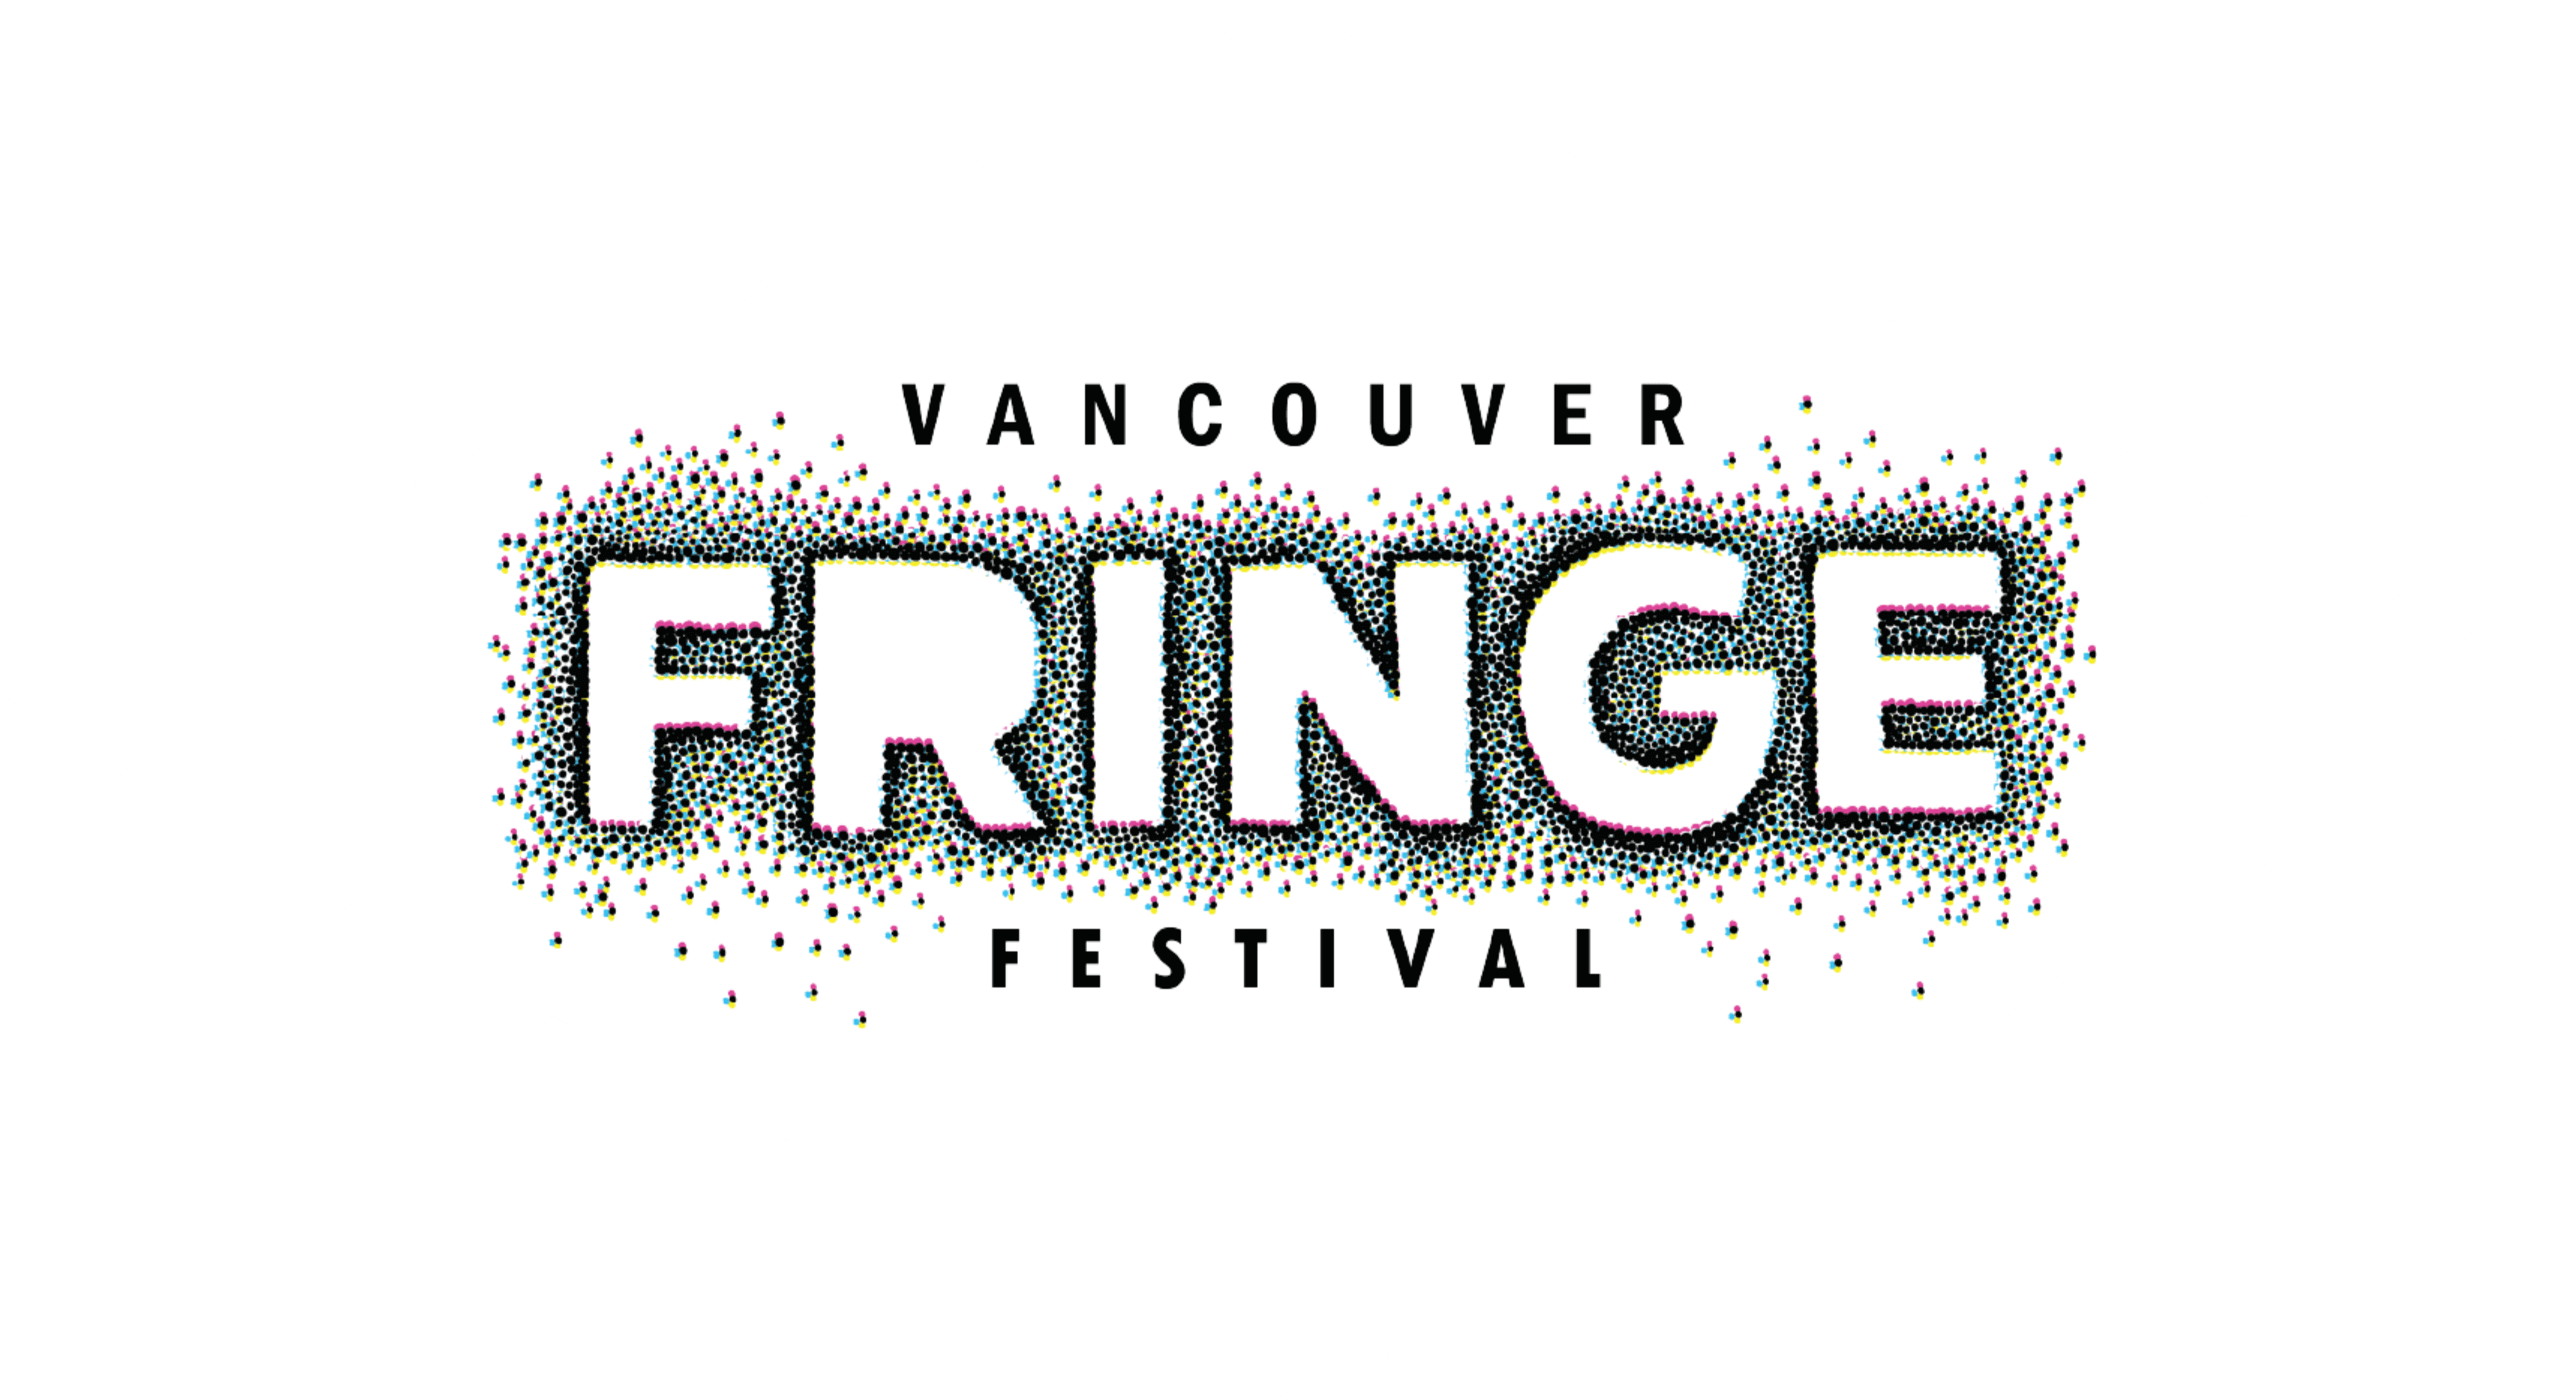 Vancouver Fringe Festival.